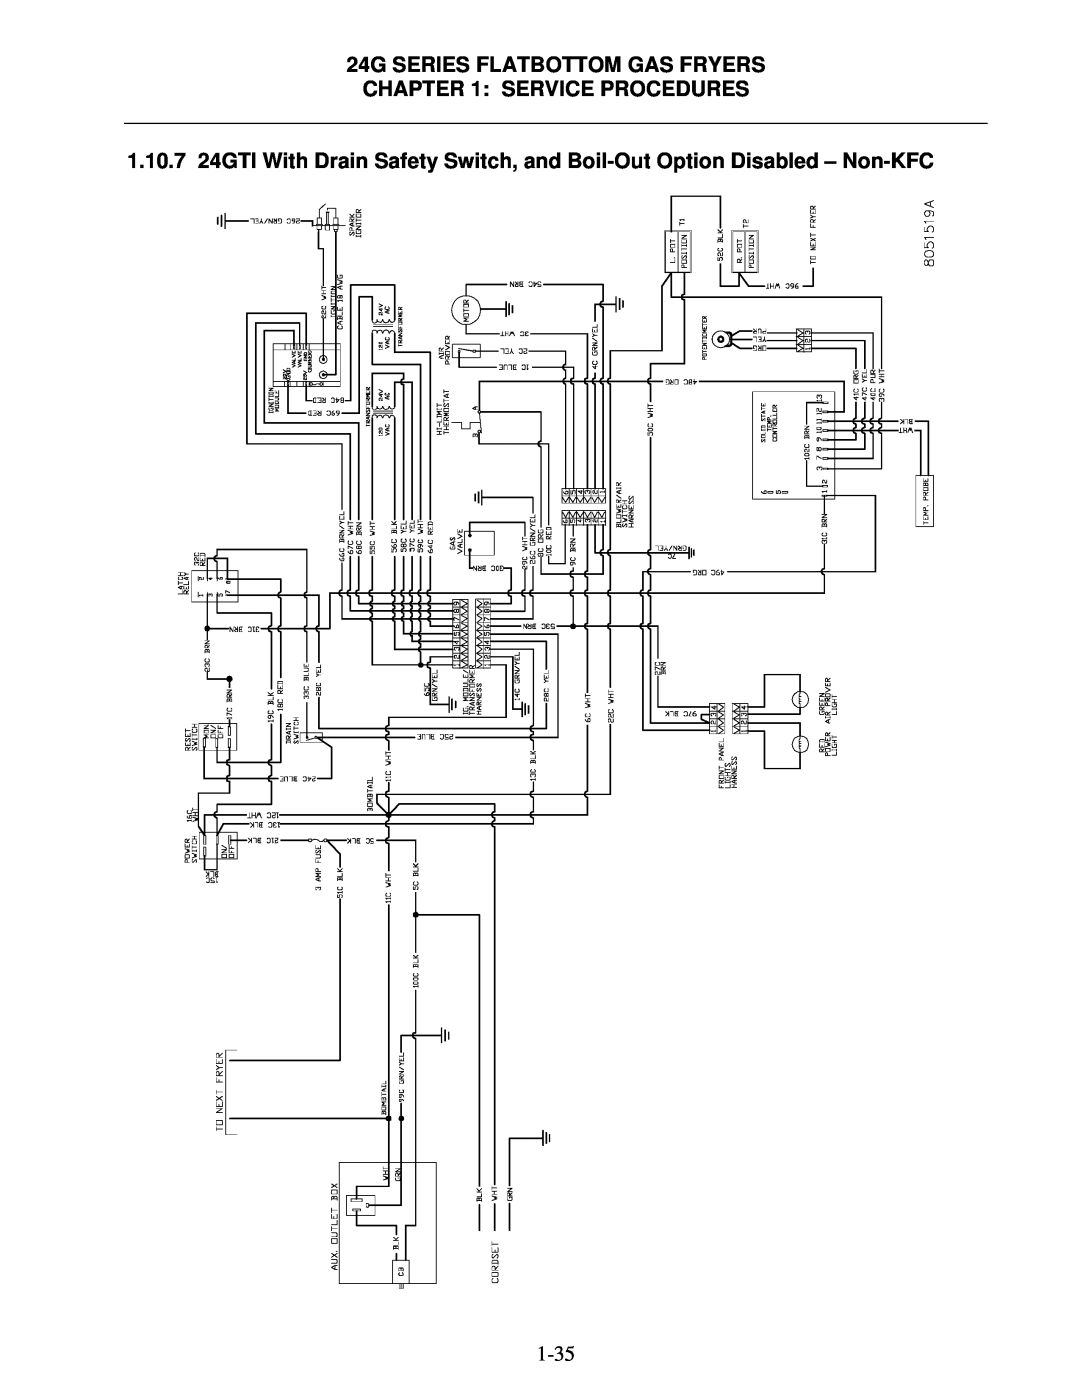 Frymaster 1824/2424G manual 24G SERIES FLATBOTTOM GAS FRYERS SERVICE PROCEDURES 